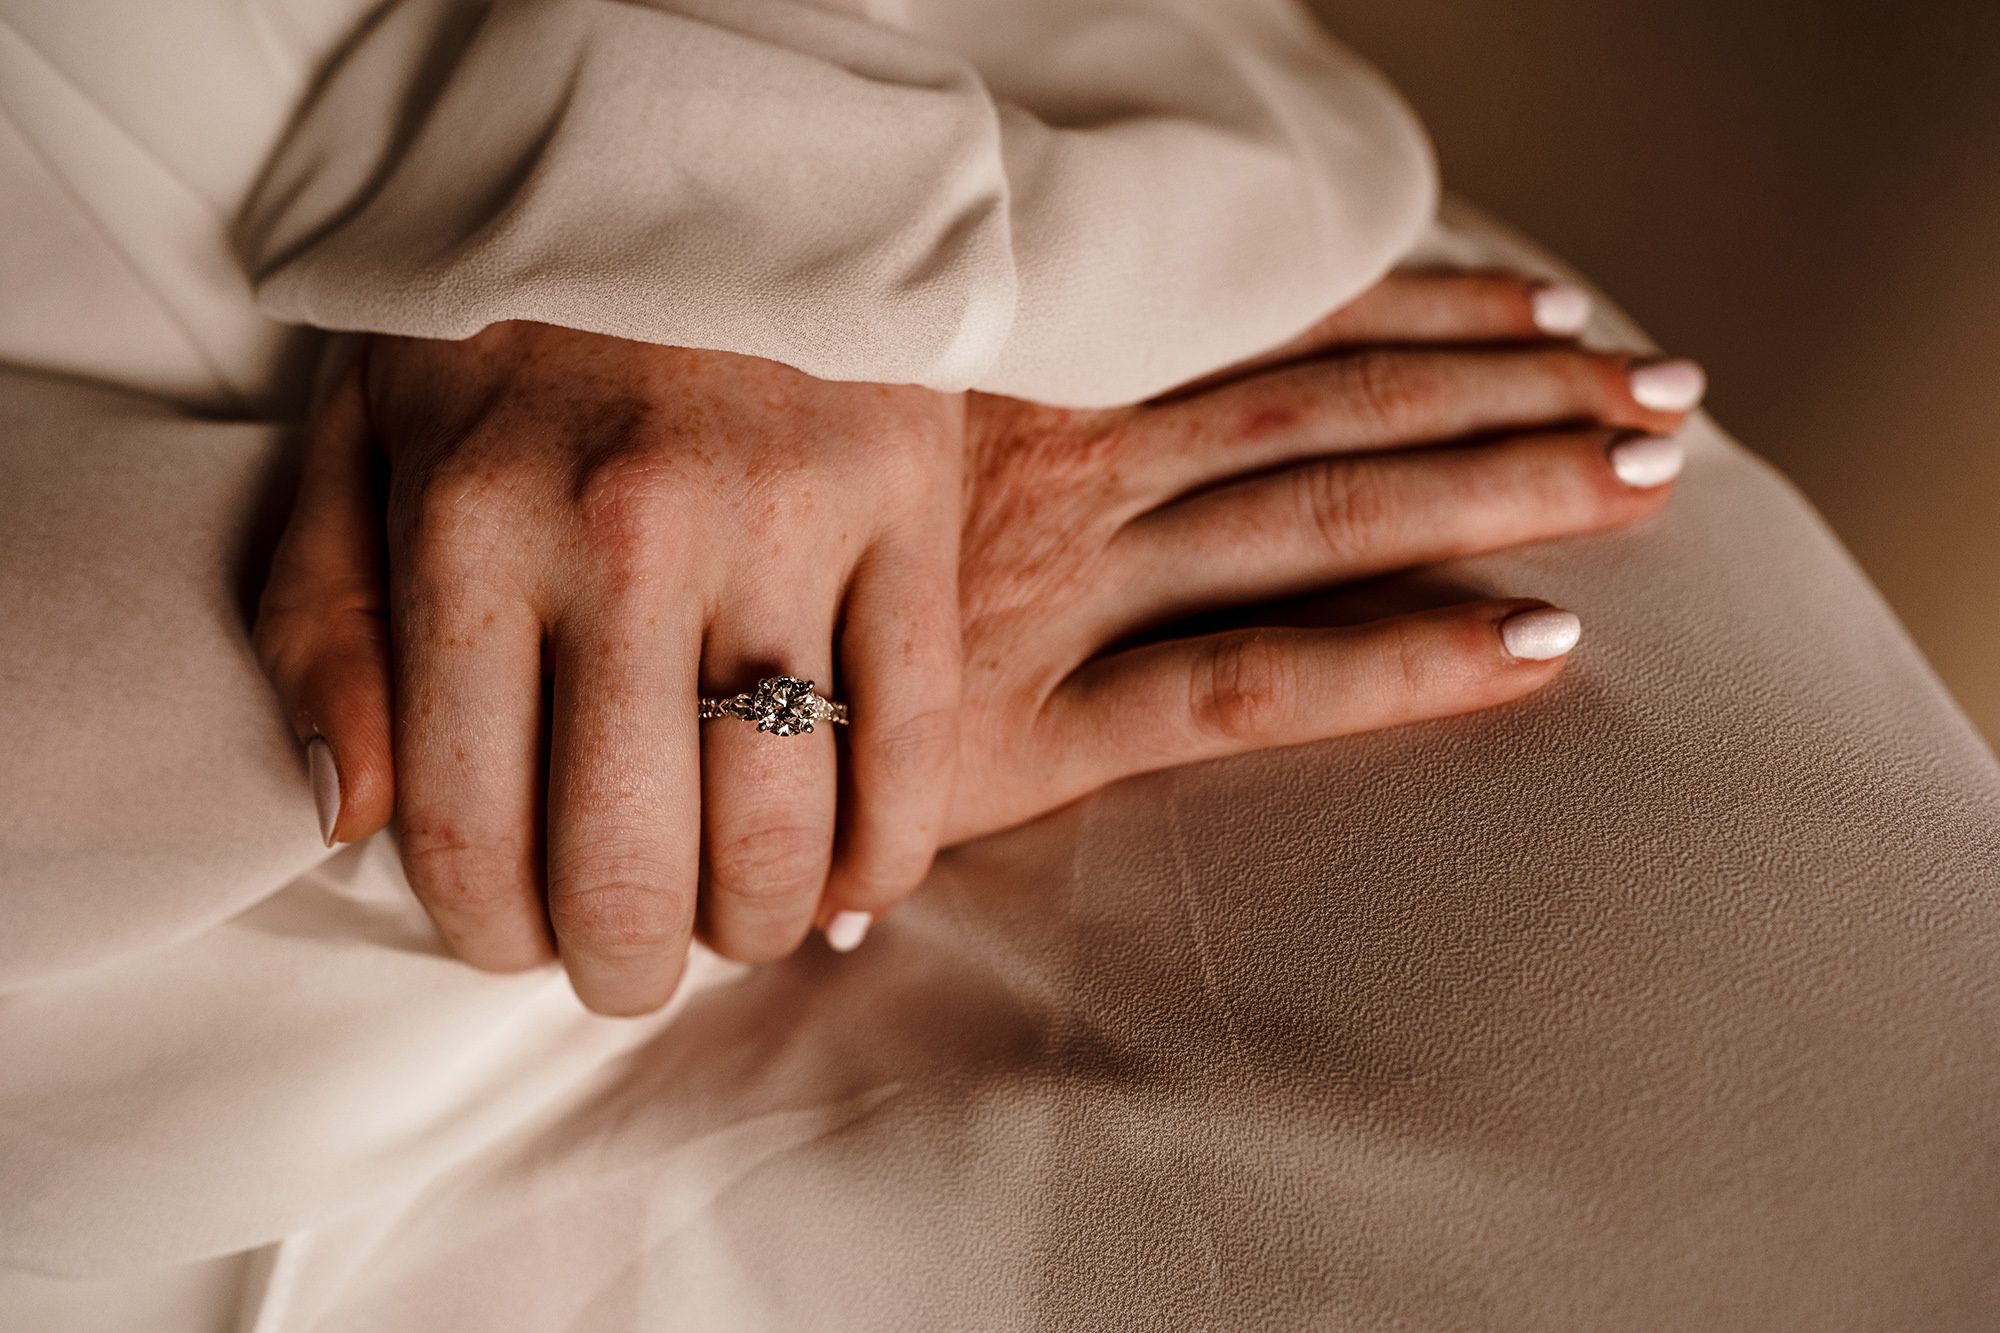 brides engagement ring on her wedding finger